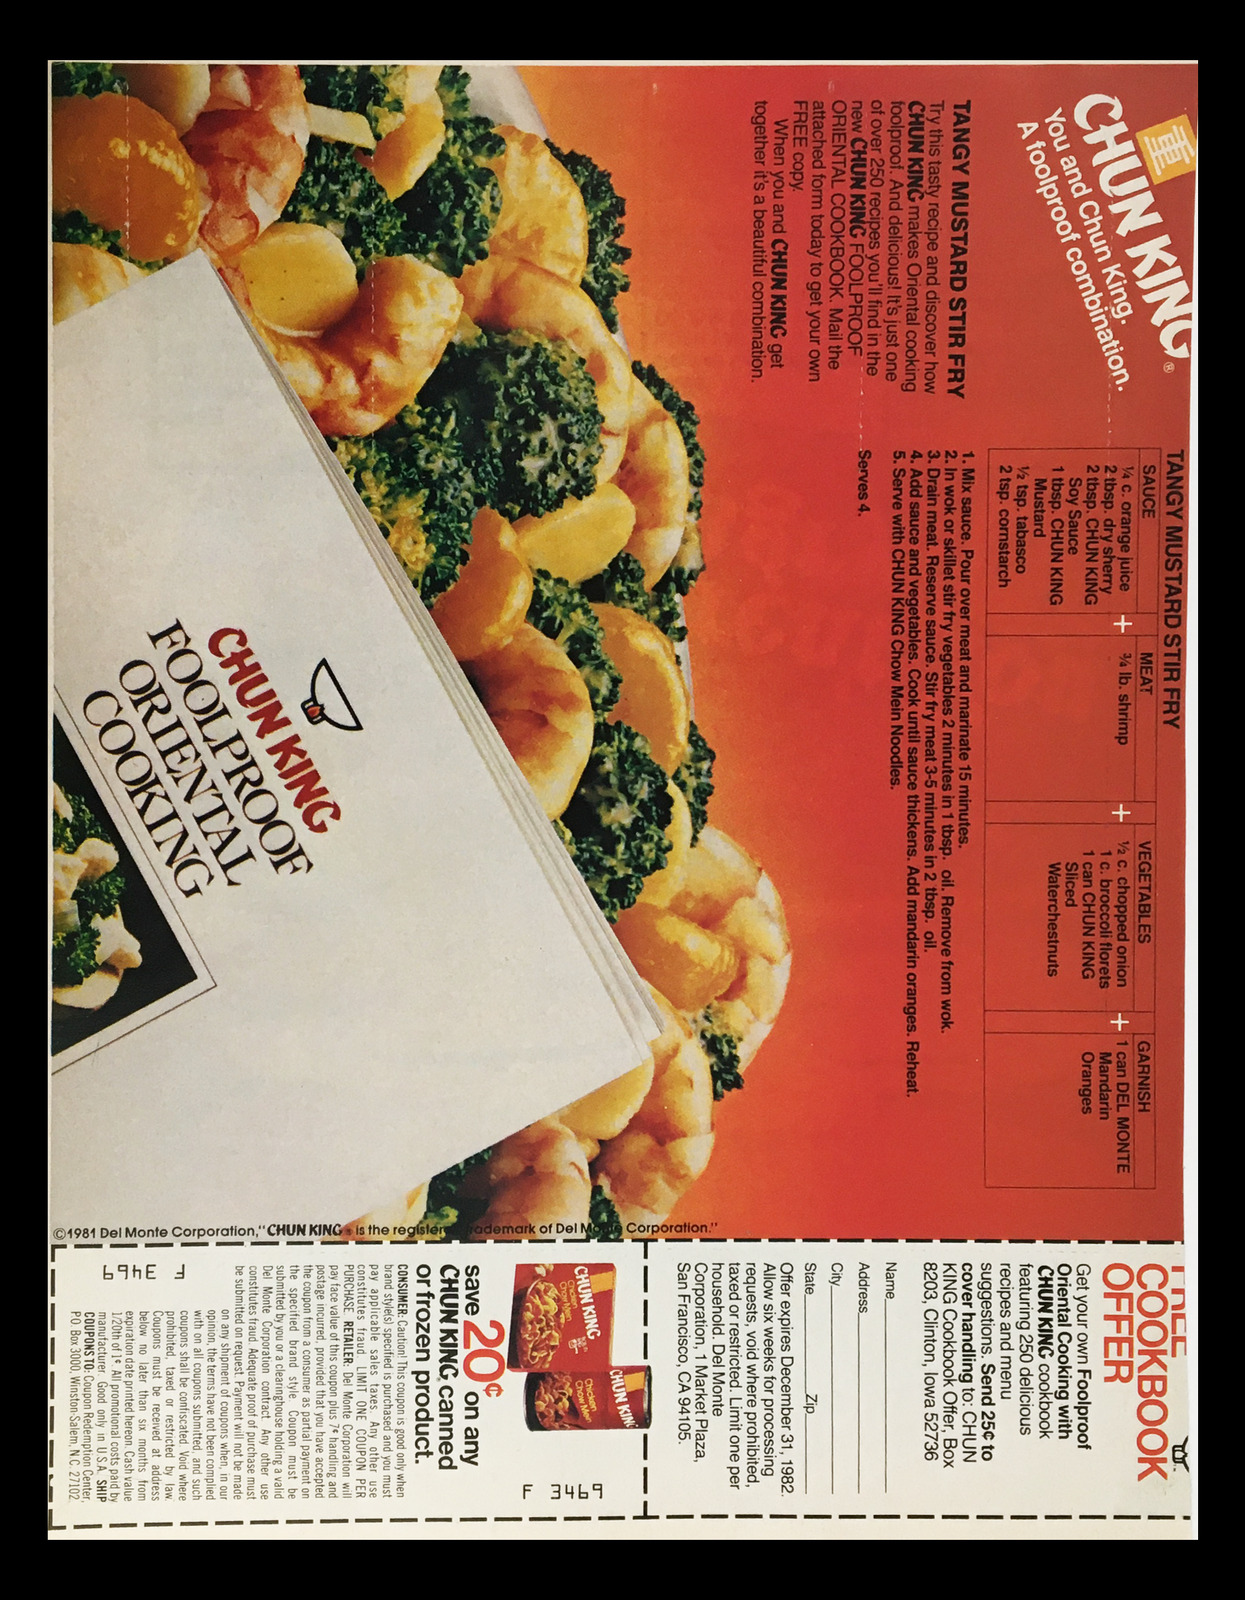 1982 Burger King Flame-Broiled Whopper Circular Coupon Advertisement